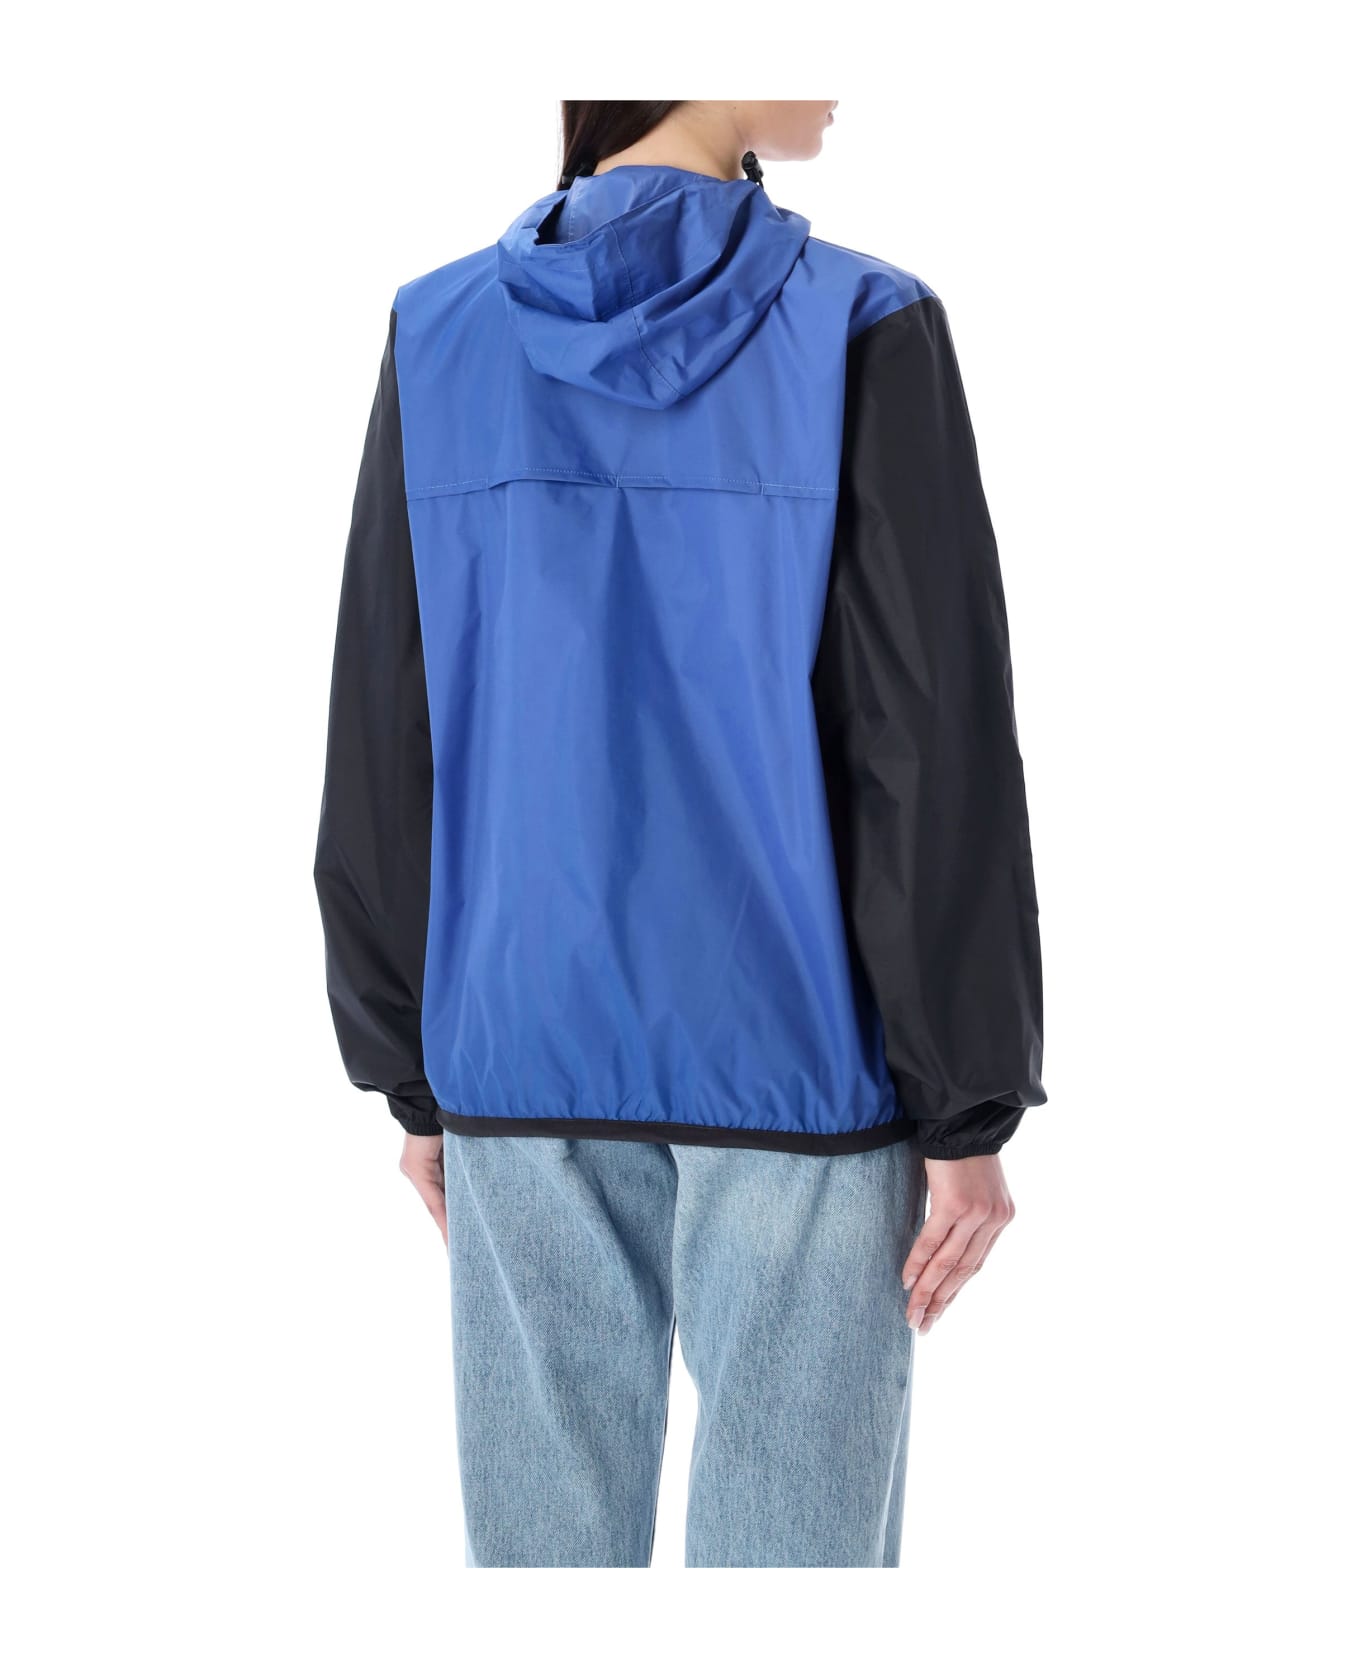 Comme des Garçons Play Bicolor Waterproof Hooded Jacket - BLUE BLACK